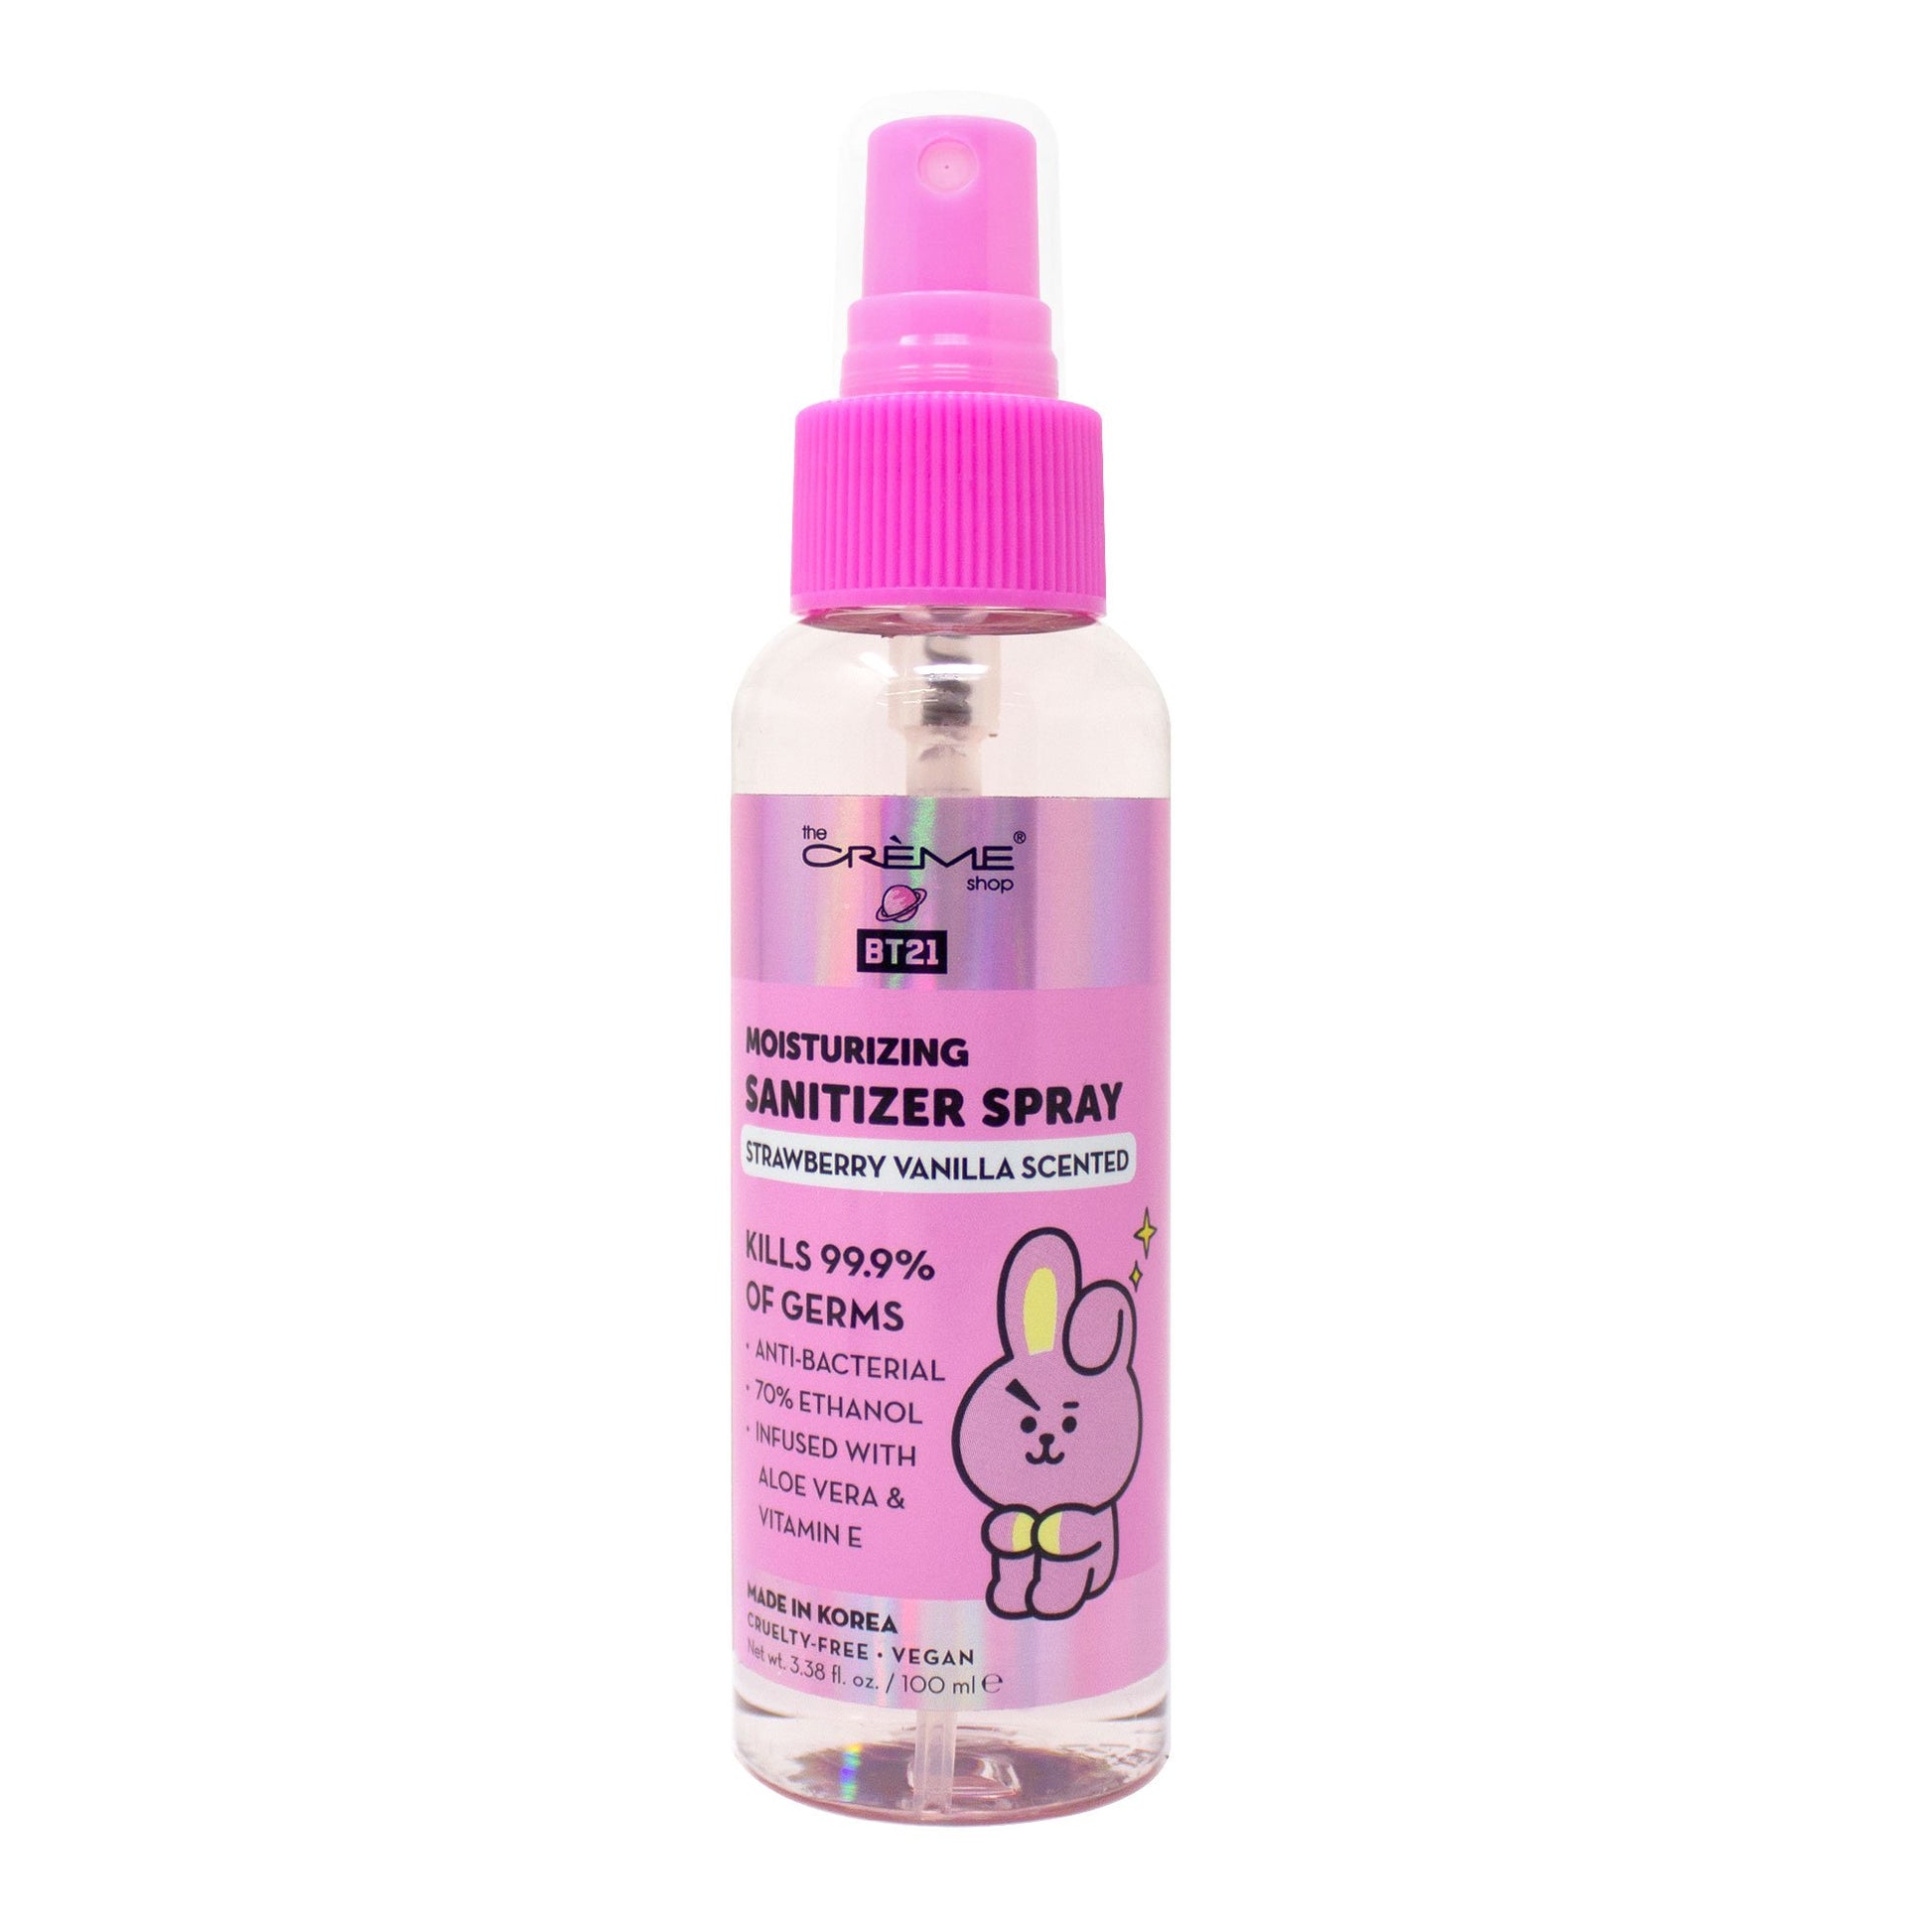 COOKY Sanitizing Spray (Strawberry Vanilla Scented) Sanitizer Sprays - The Crème Shop x BT21 